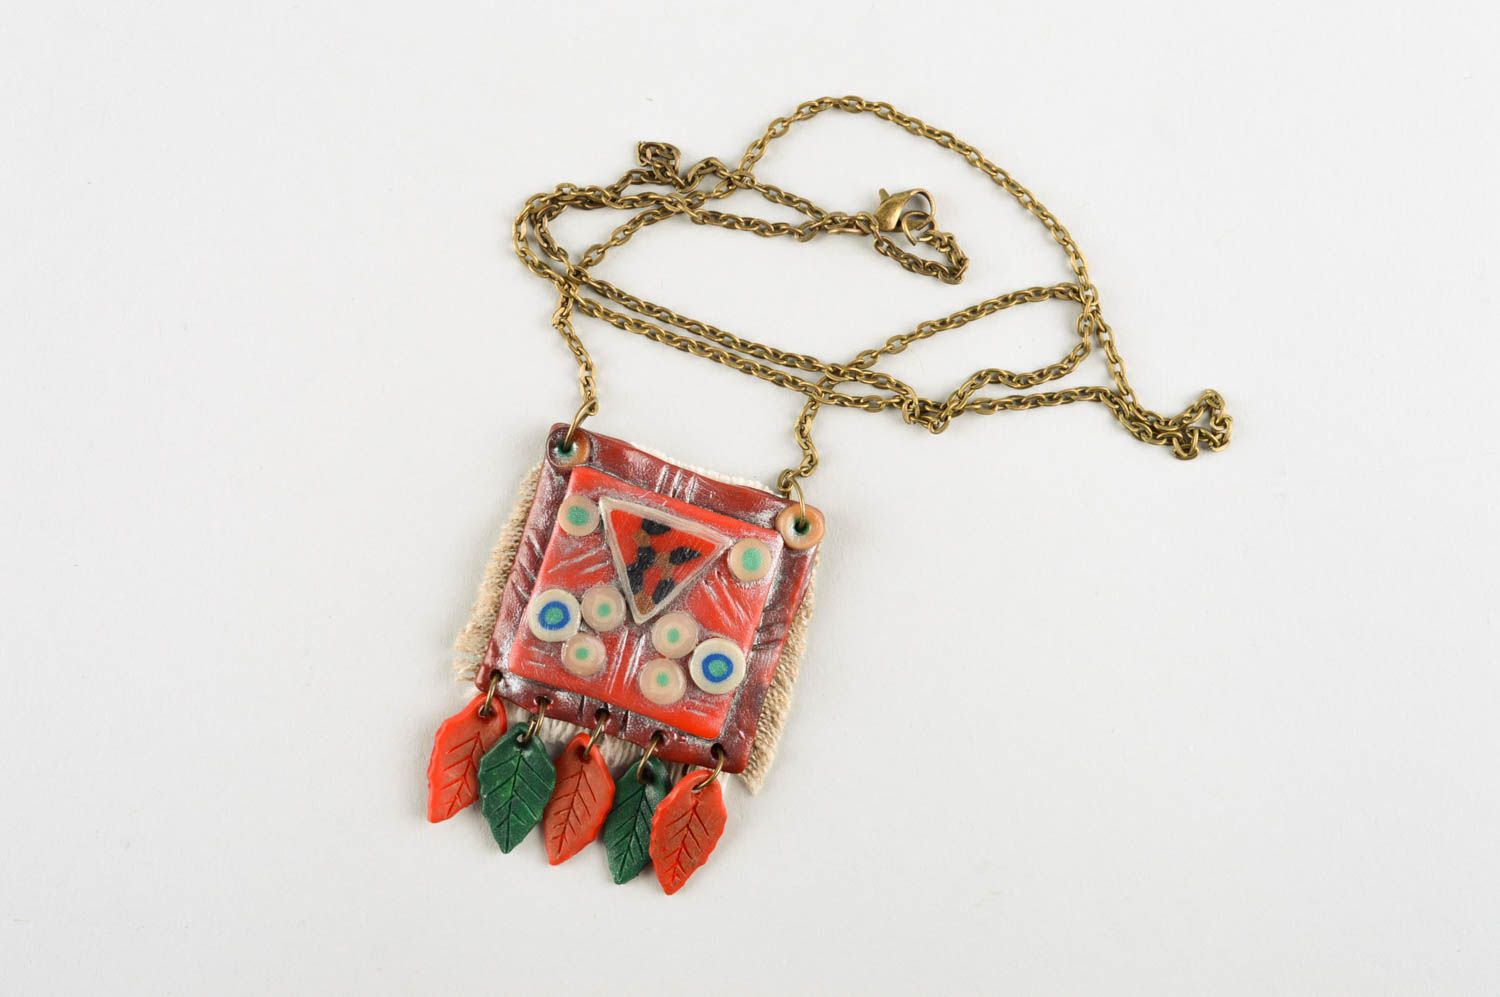 Handmade ethnic jewelry pendant necklace chain necklace designer accessories photo 2